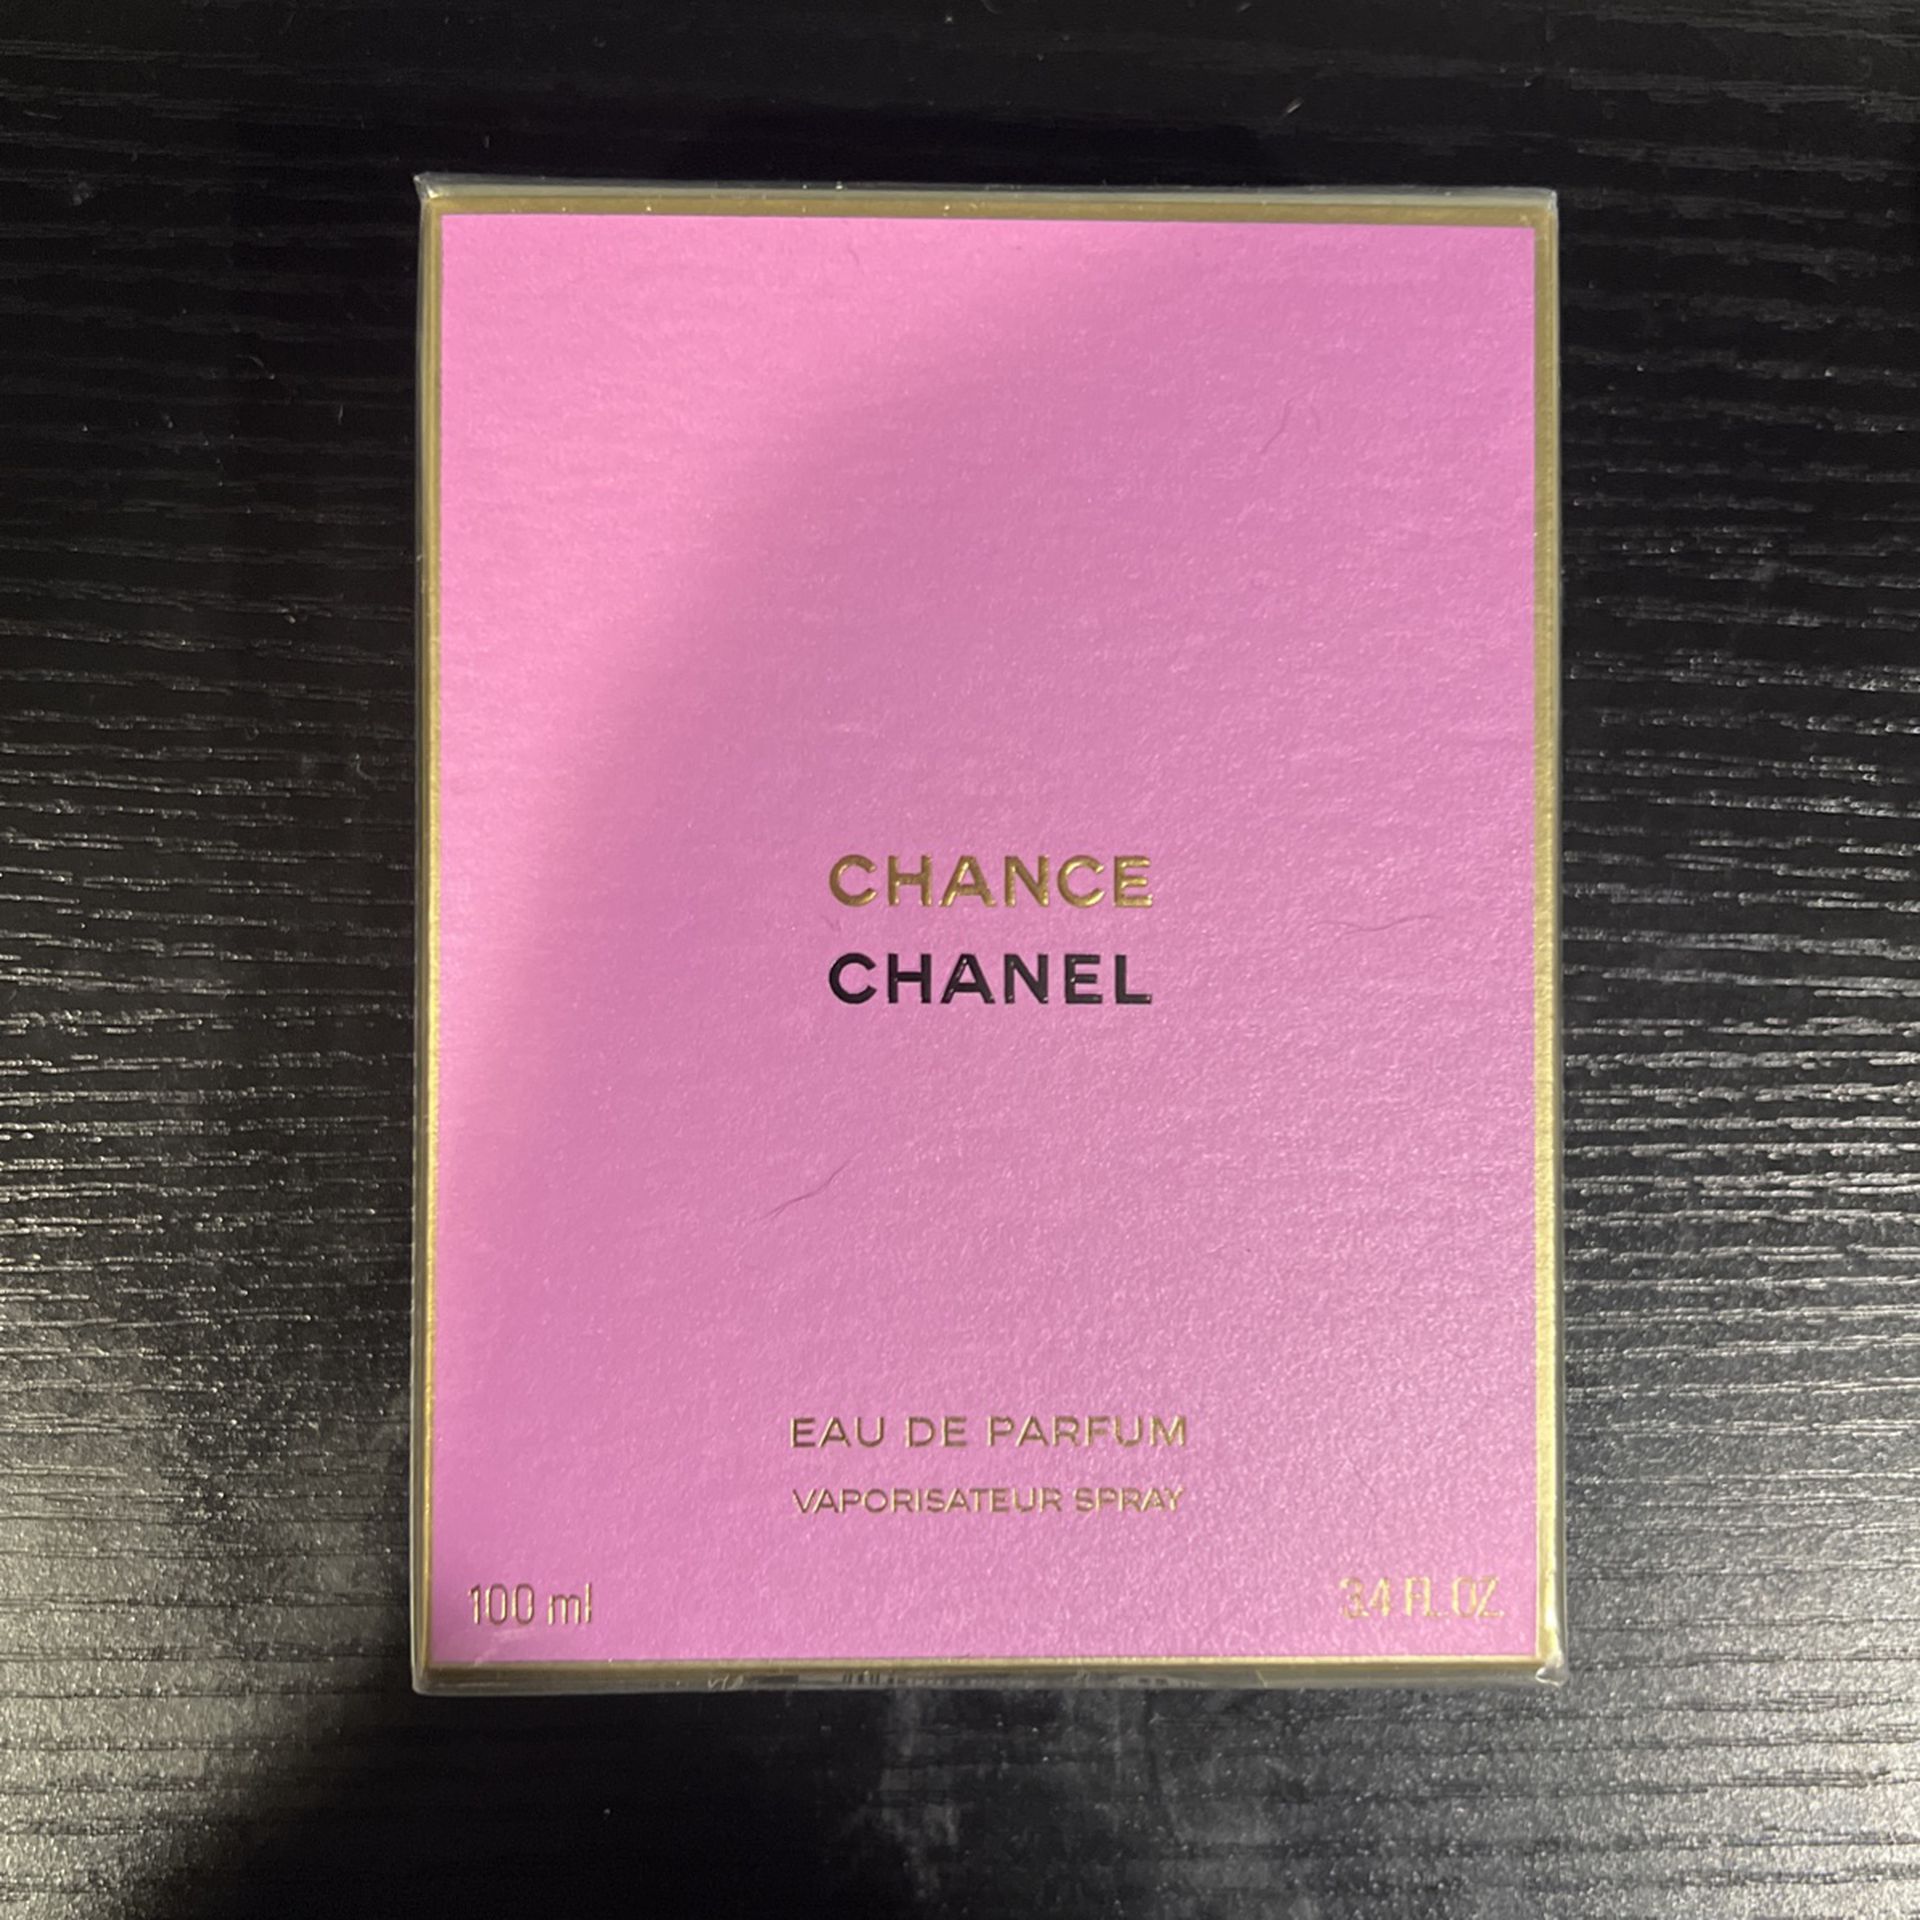 chanel chance perfume for women 100ml